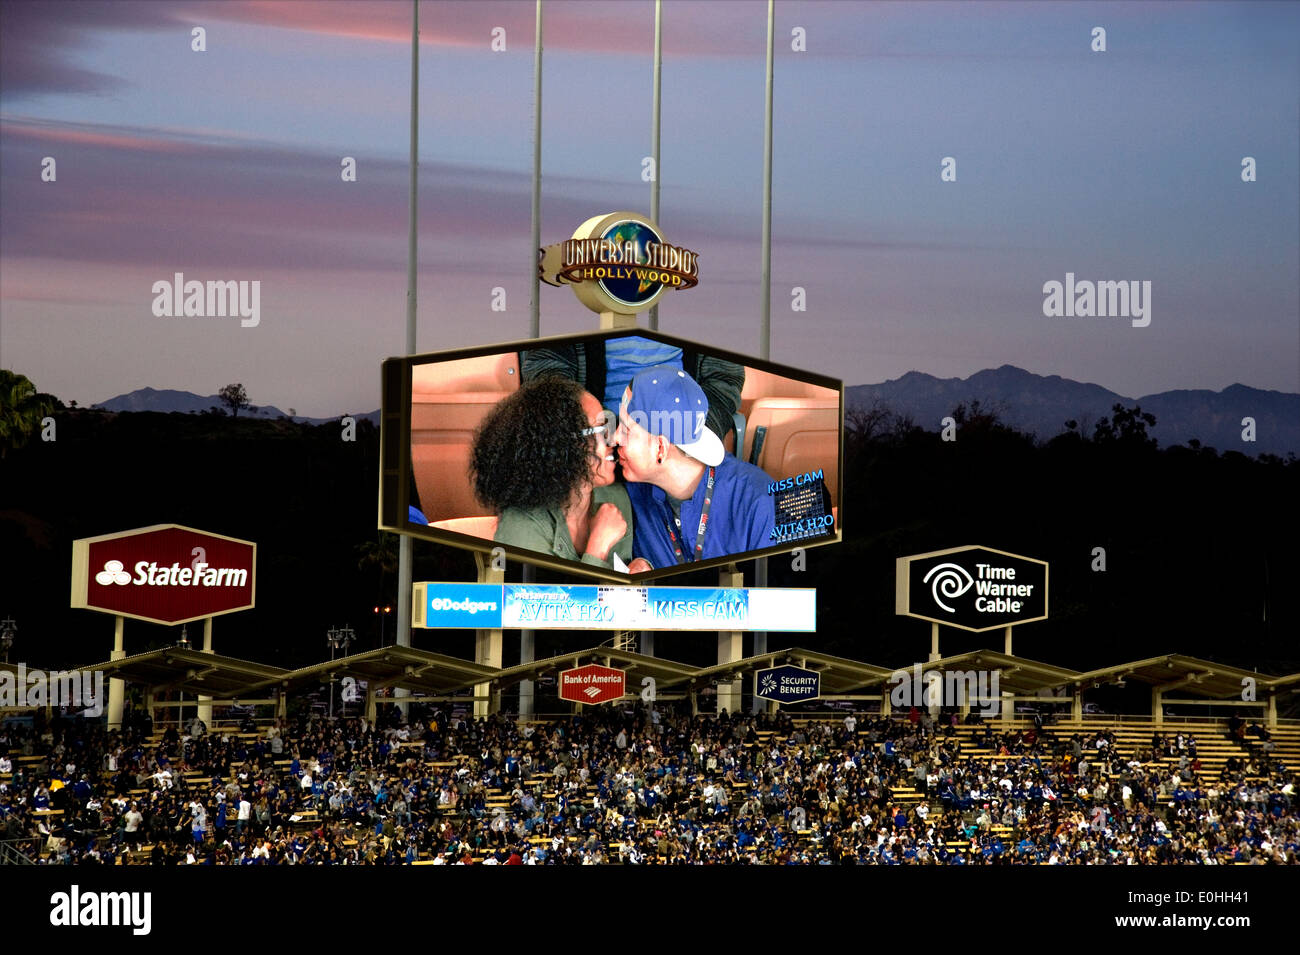 Jumbo scoreboard at Dodger Stadium displaying fans kissing Stock Photo